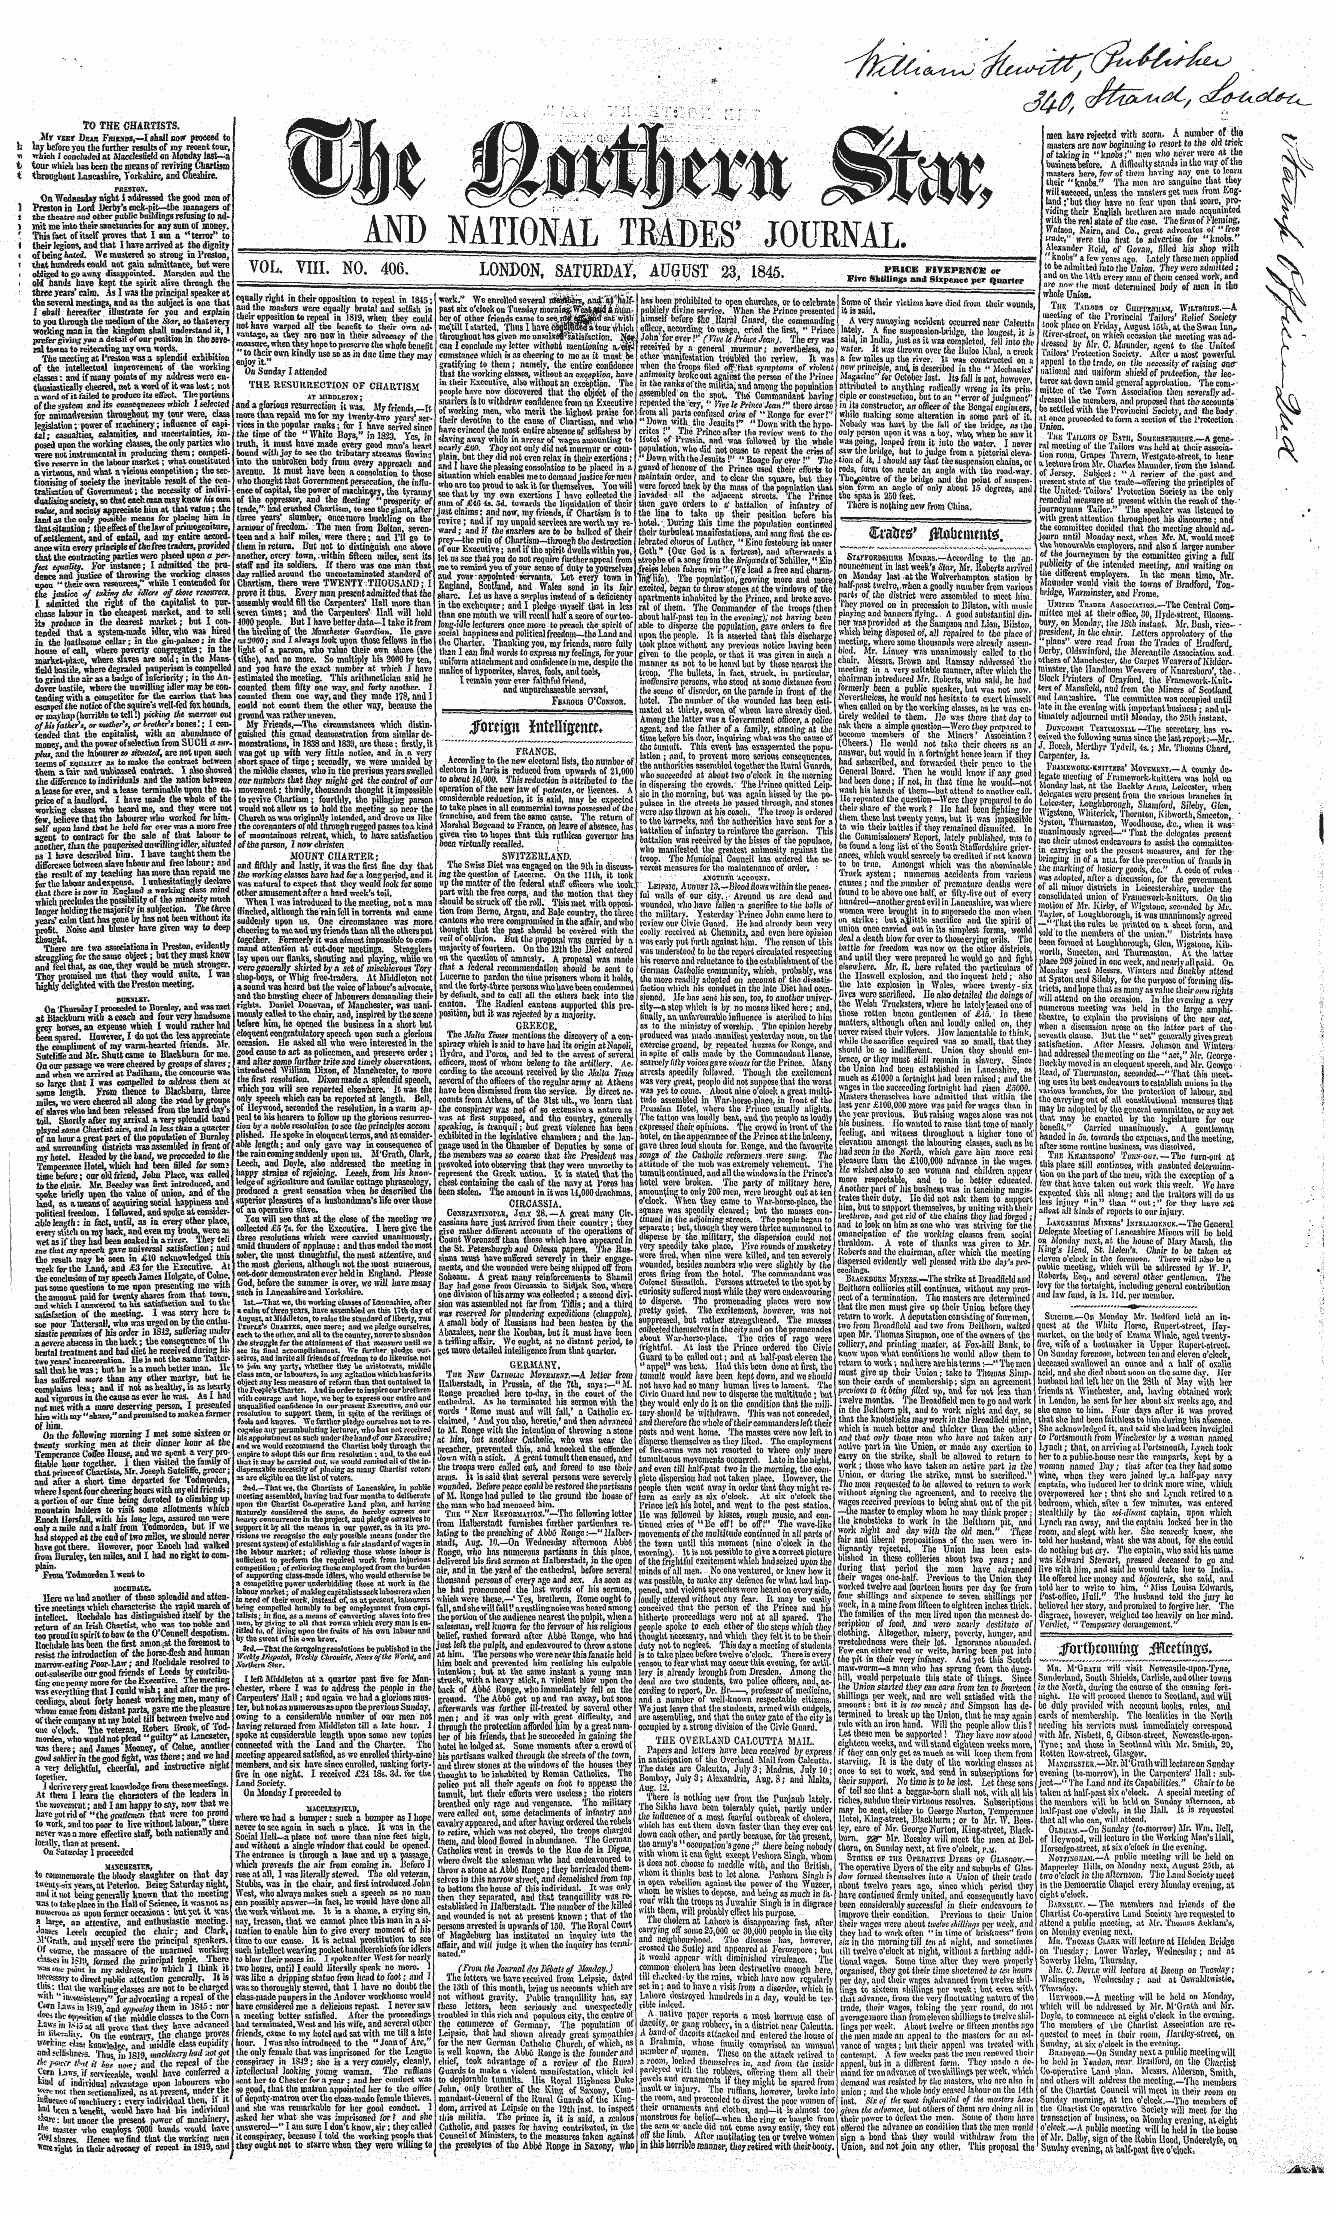 Northern Star (1837-1852): jS F Y, 2nd edition - 4fordp $Ntellupue*